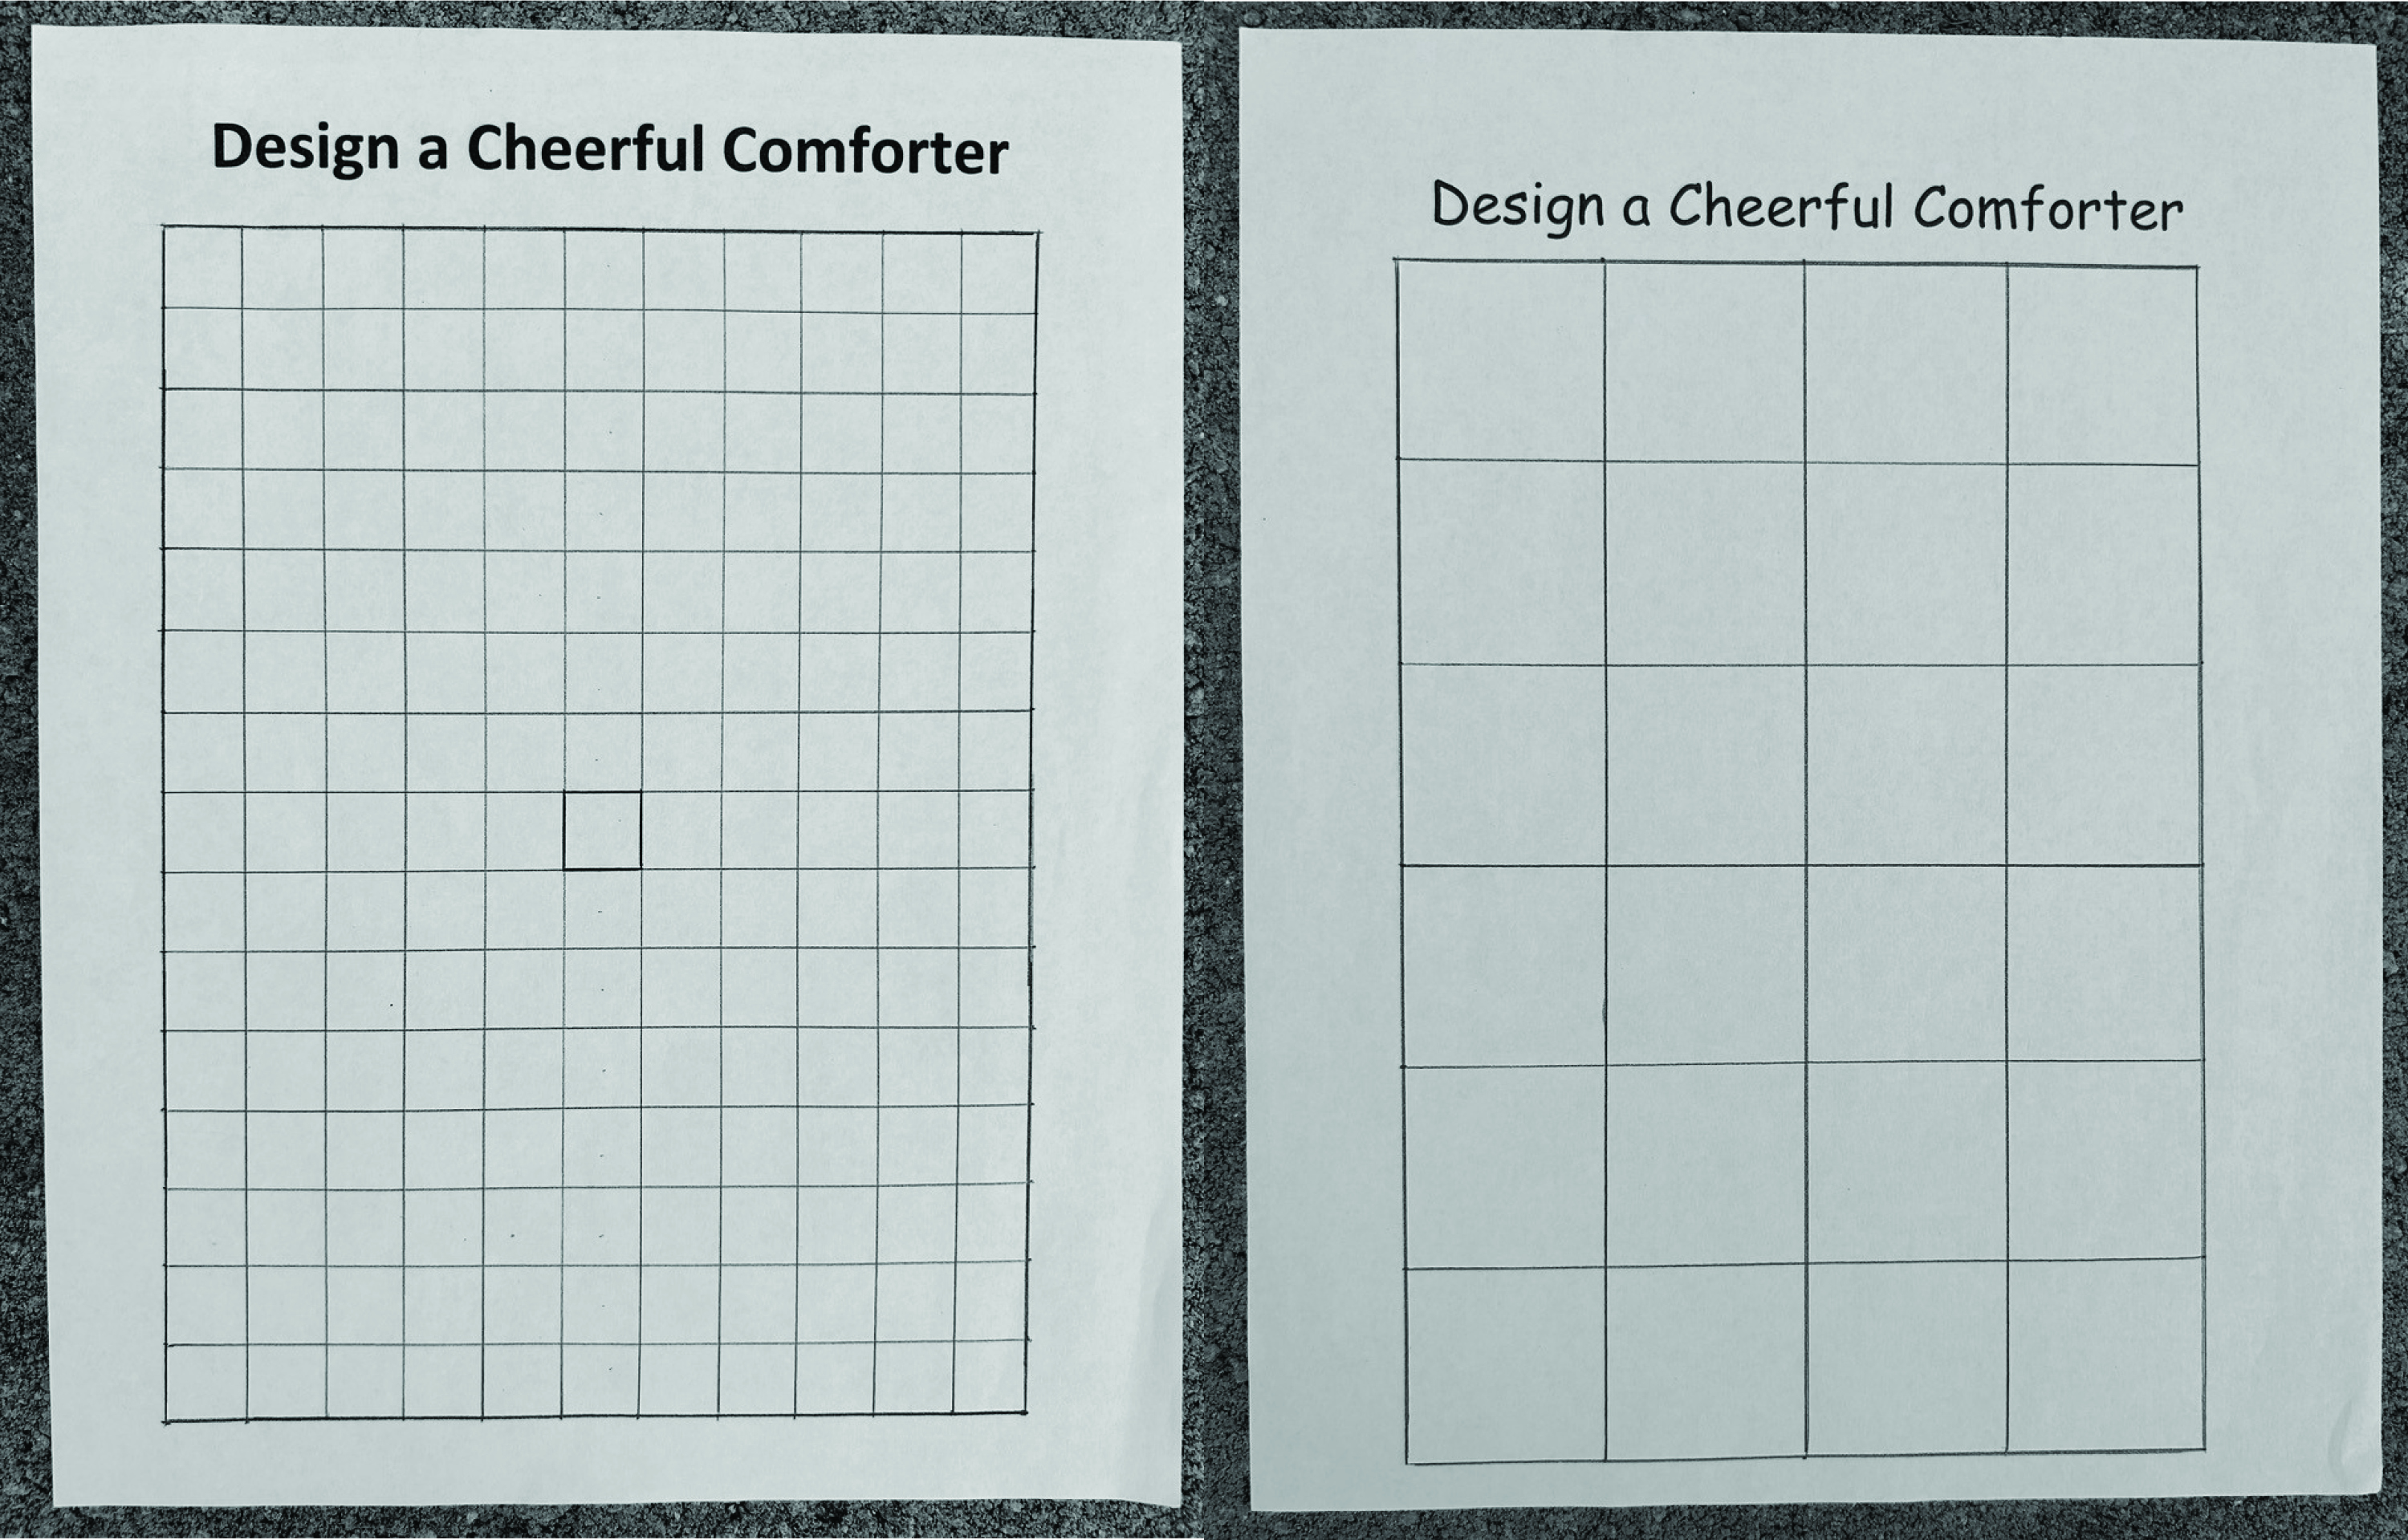 Comforter design grids.